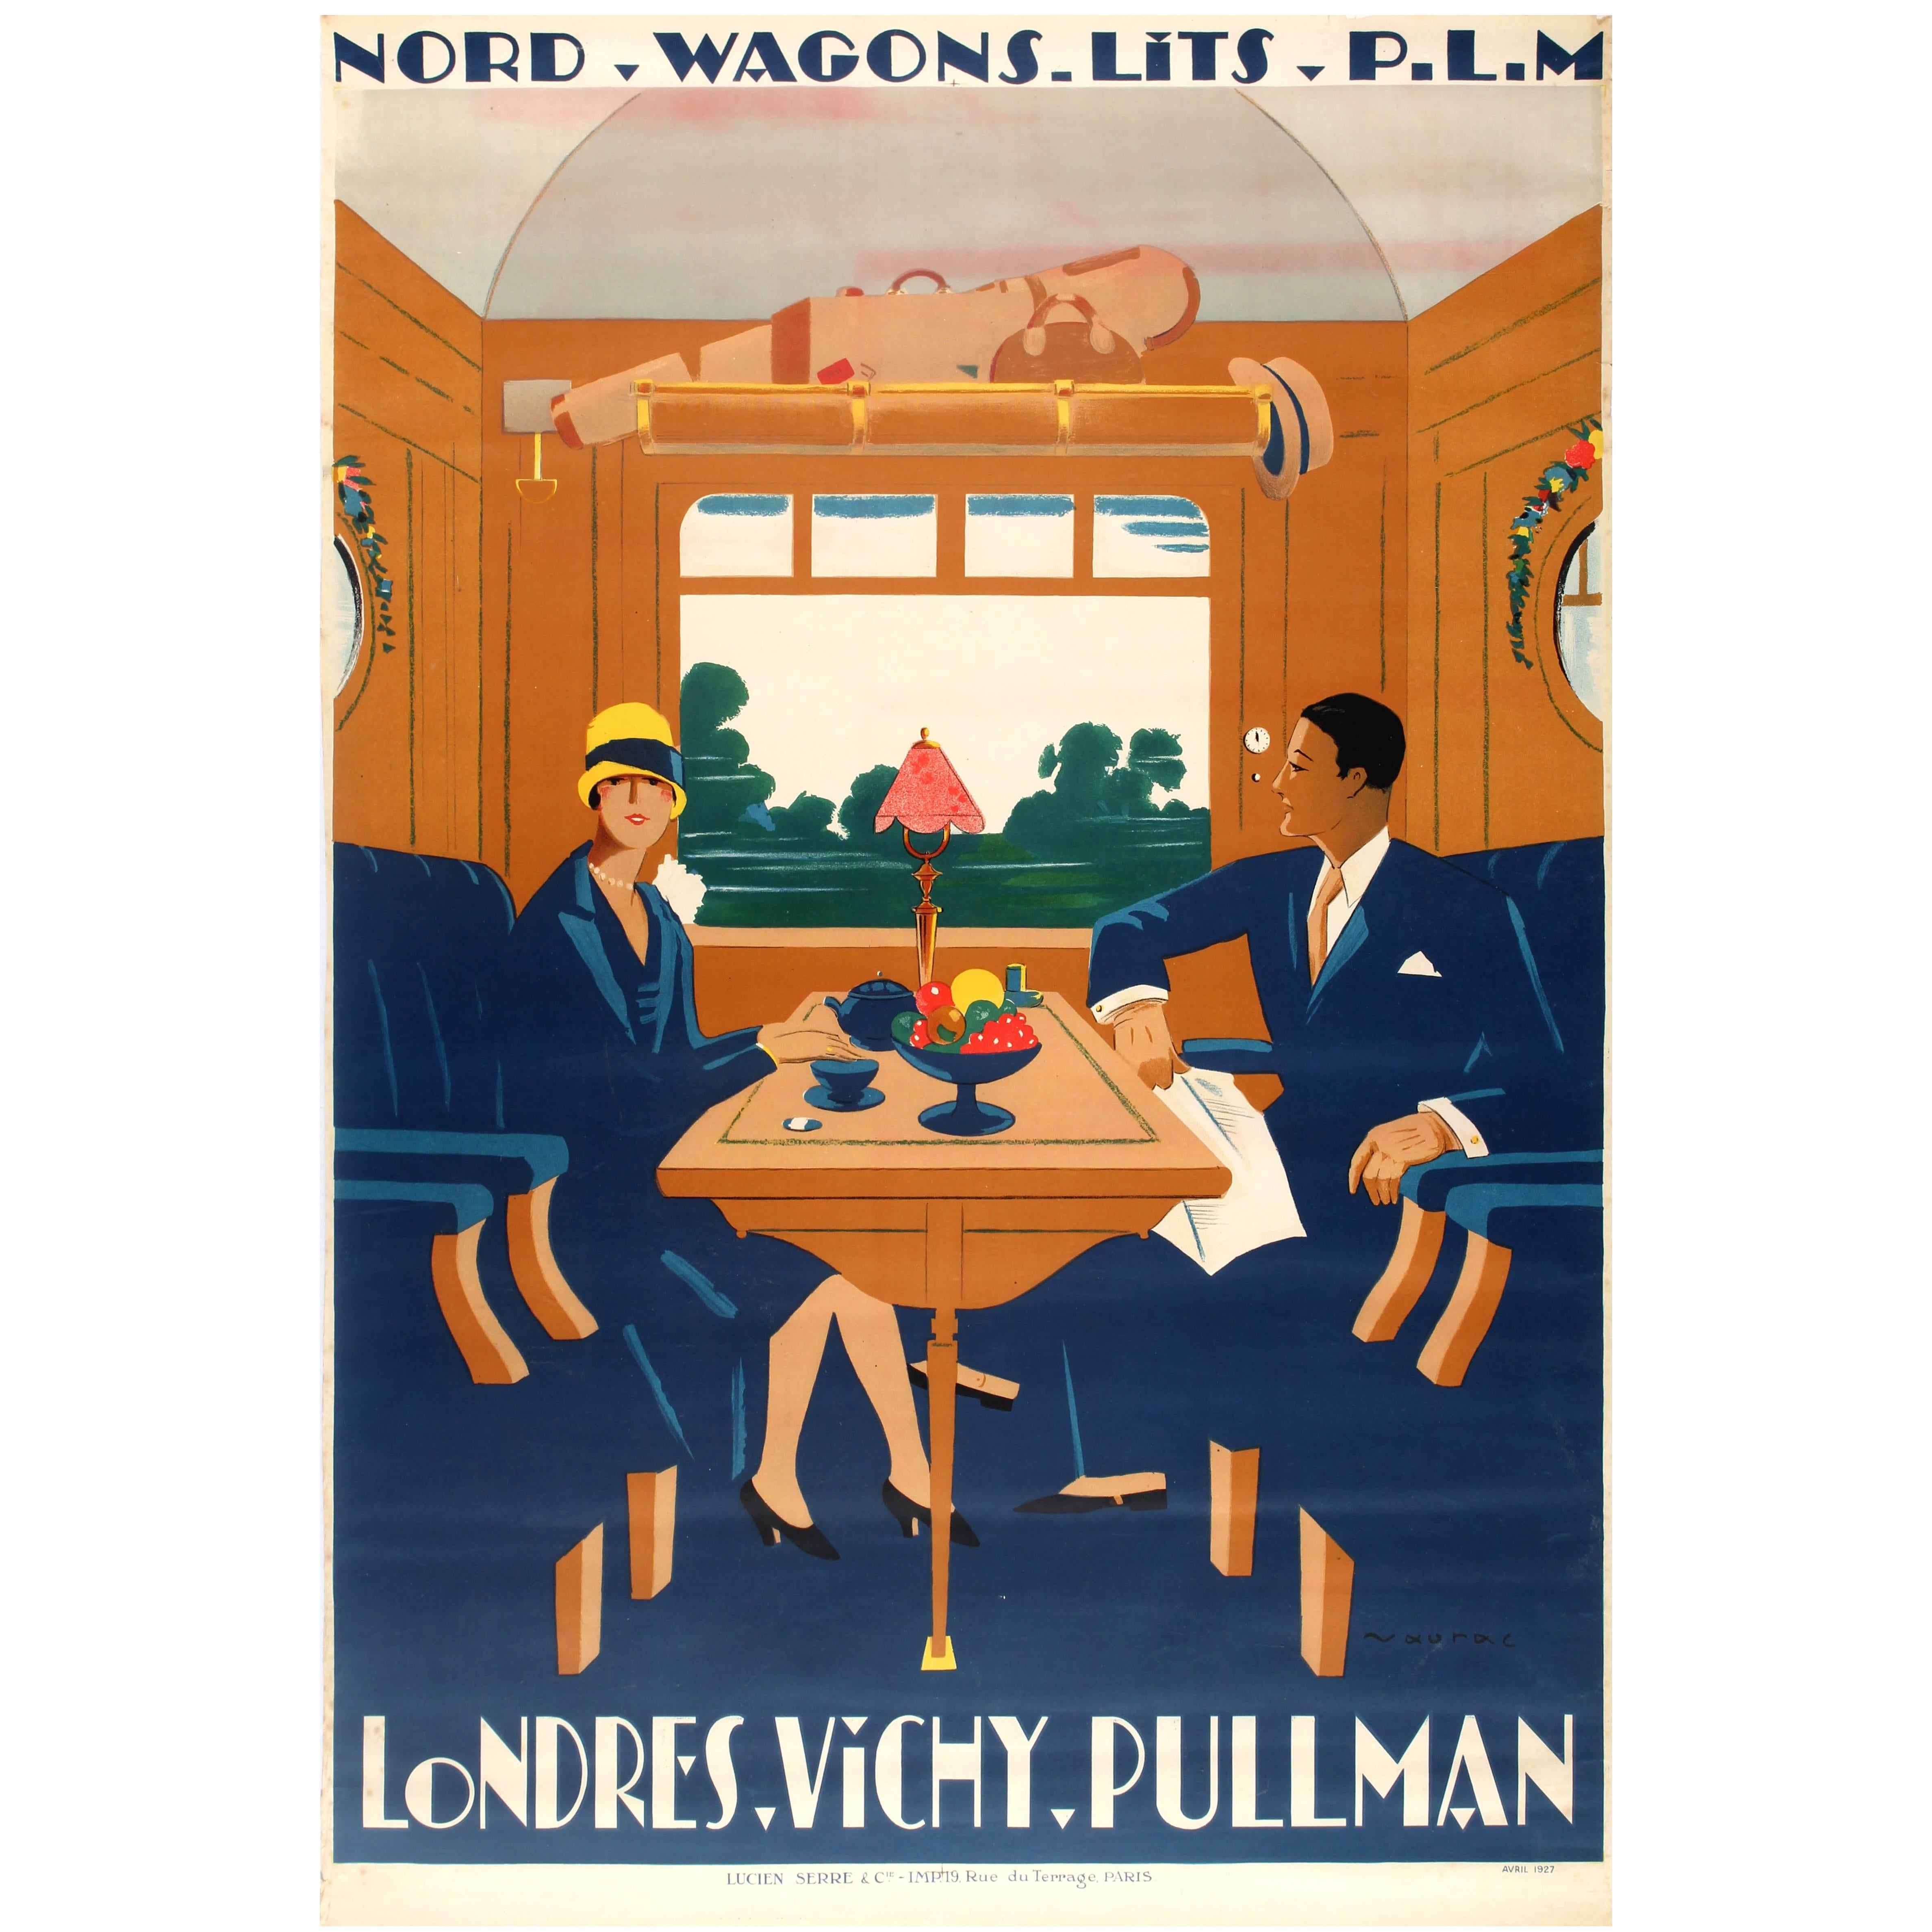 Original PLM French Railway Travel Poster for Wagons Lits ‘London Vichy Pullman’